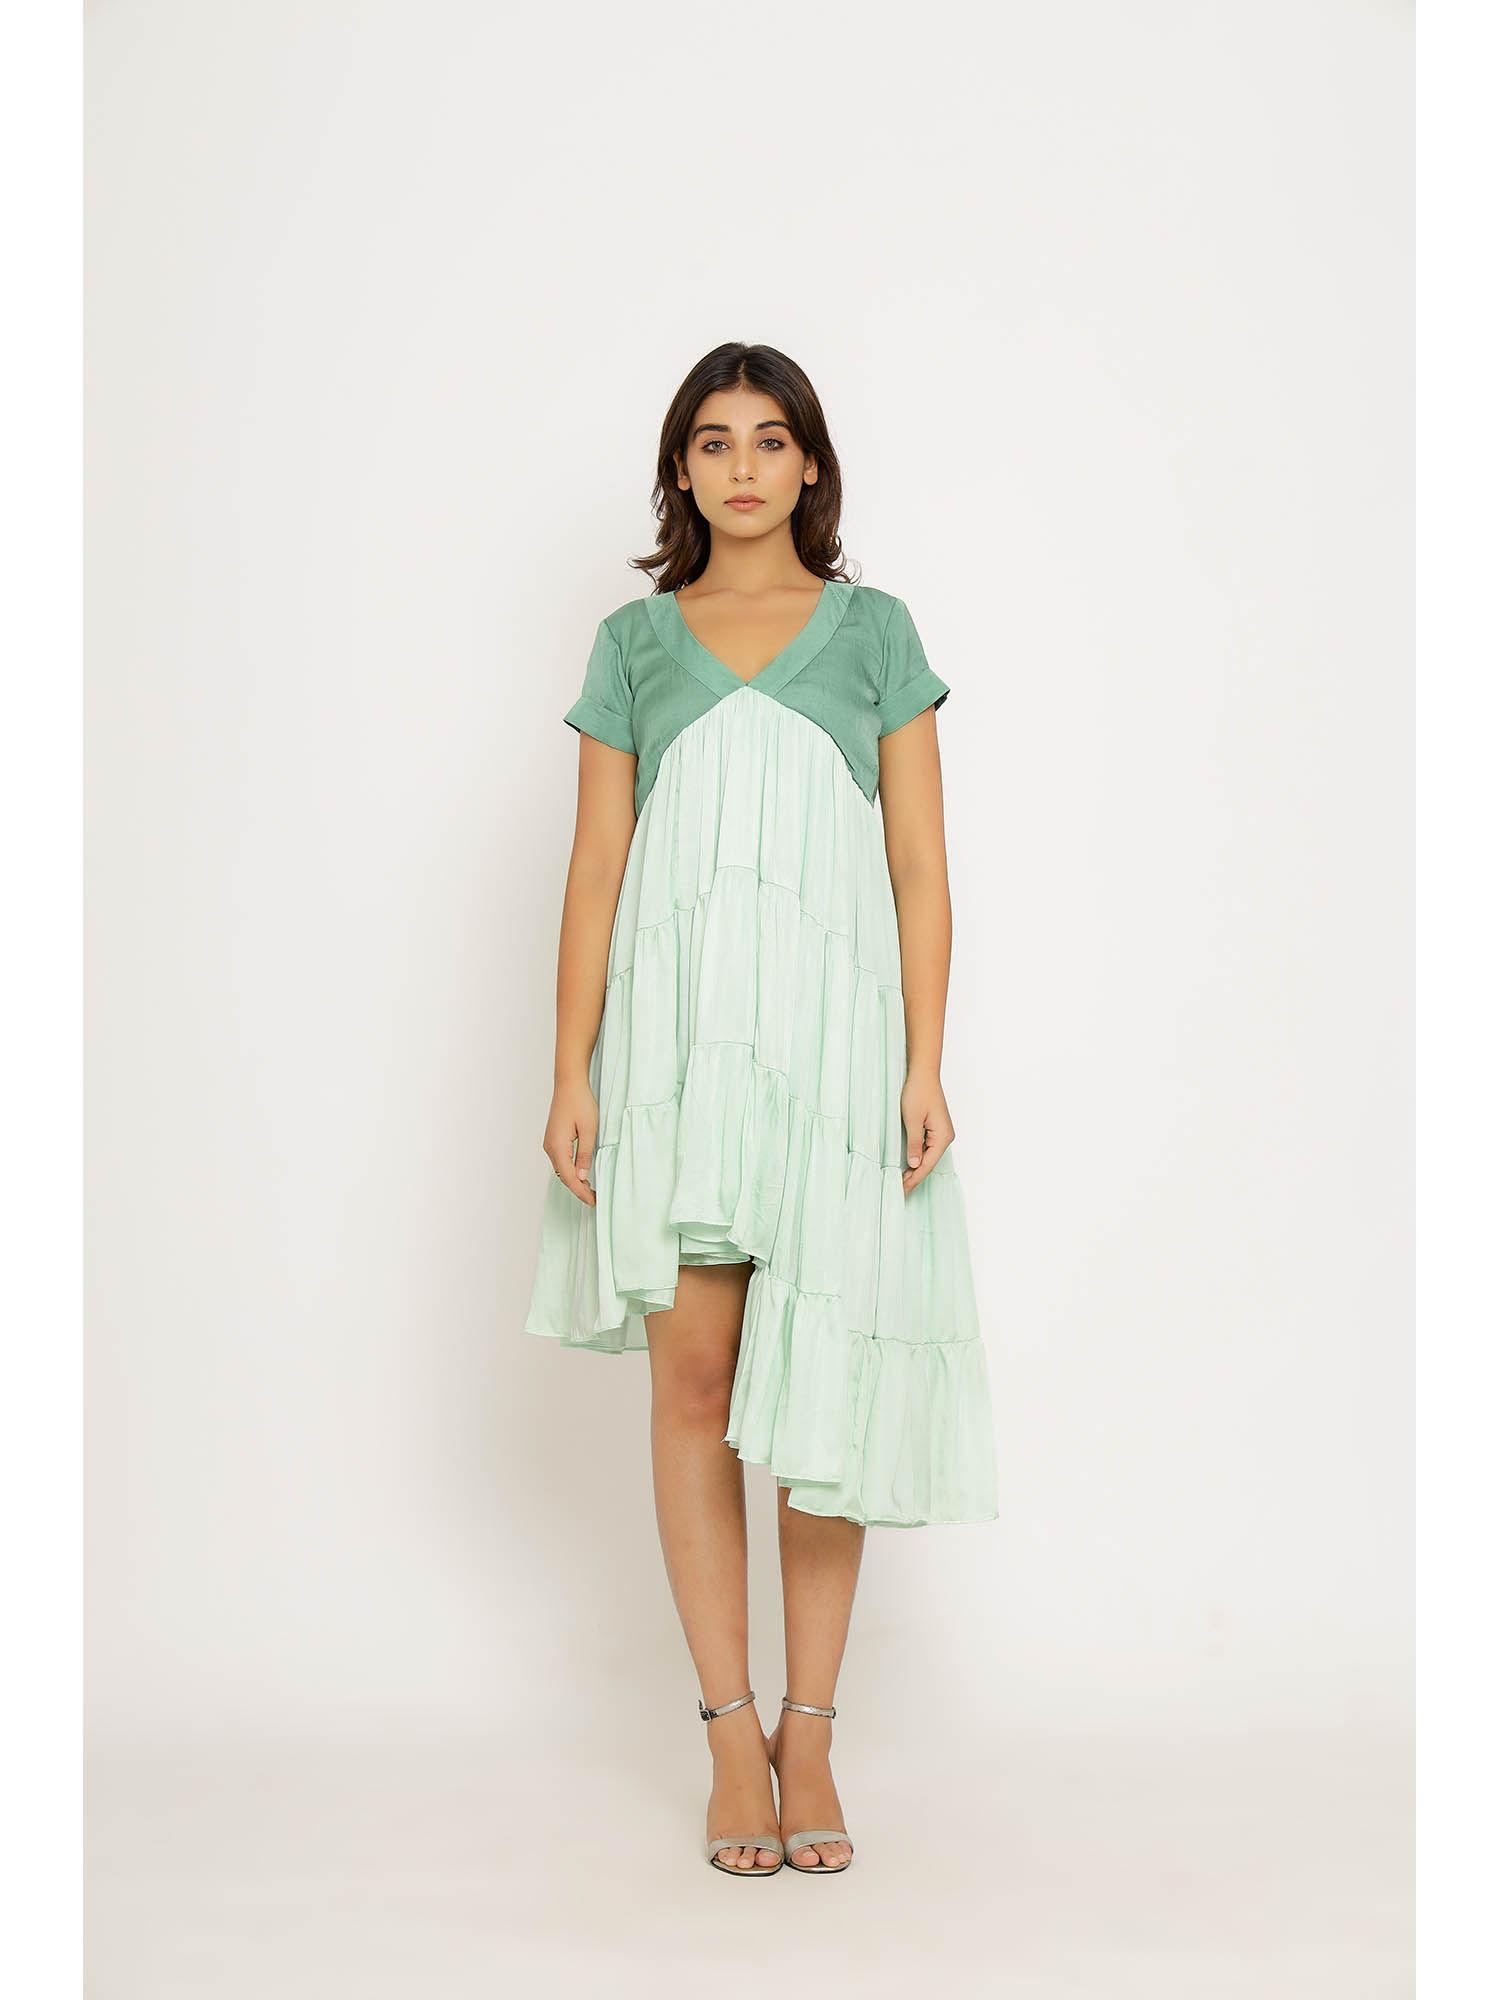 teal & tea green asymmetrical midi dress